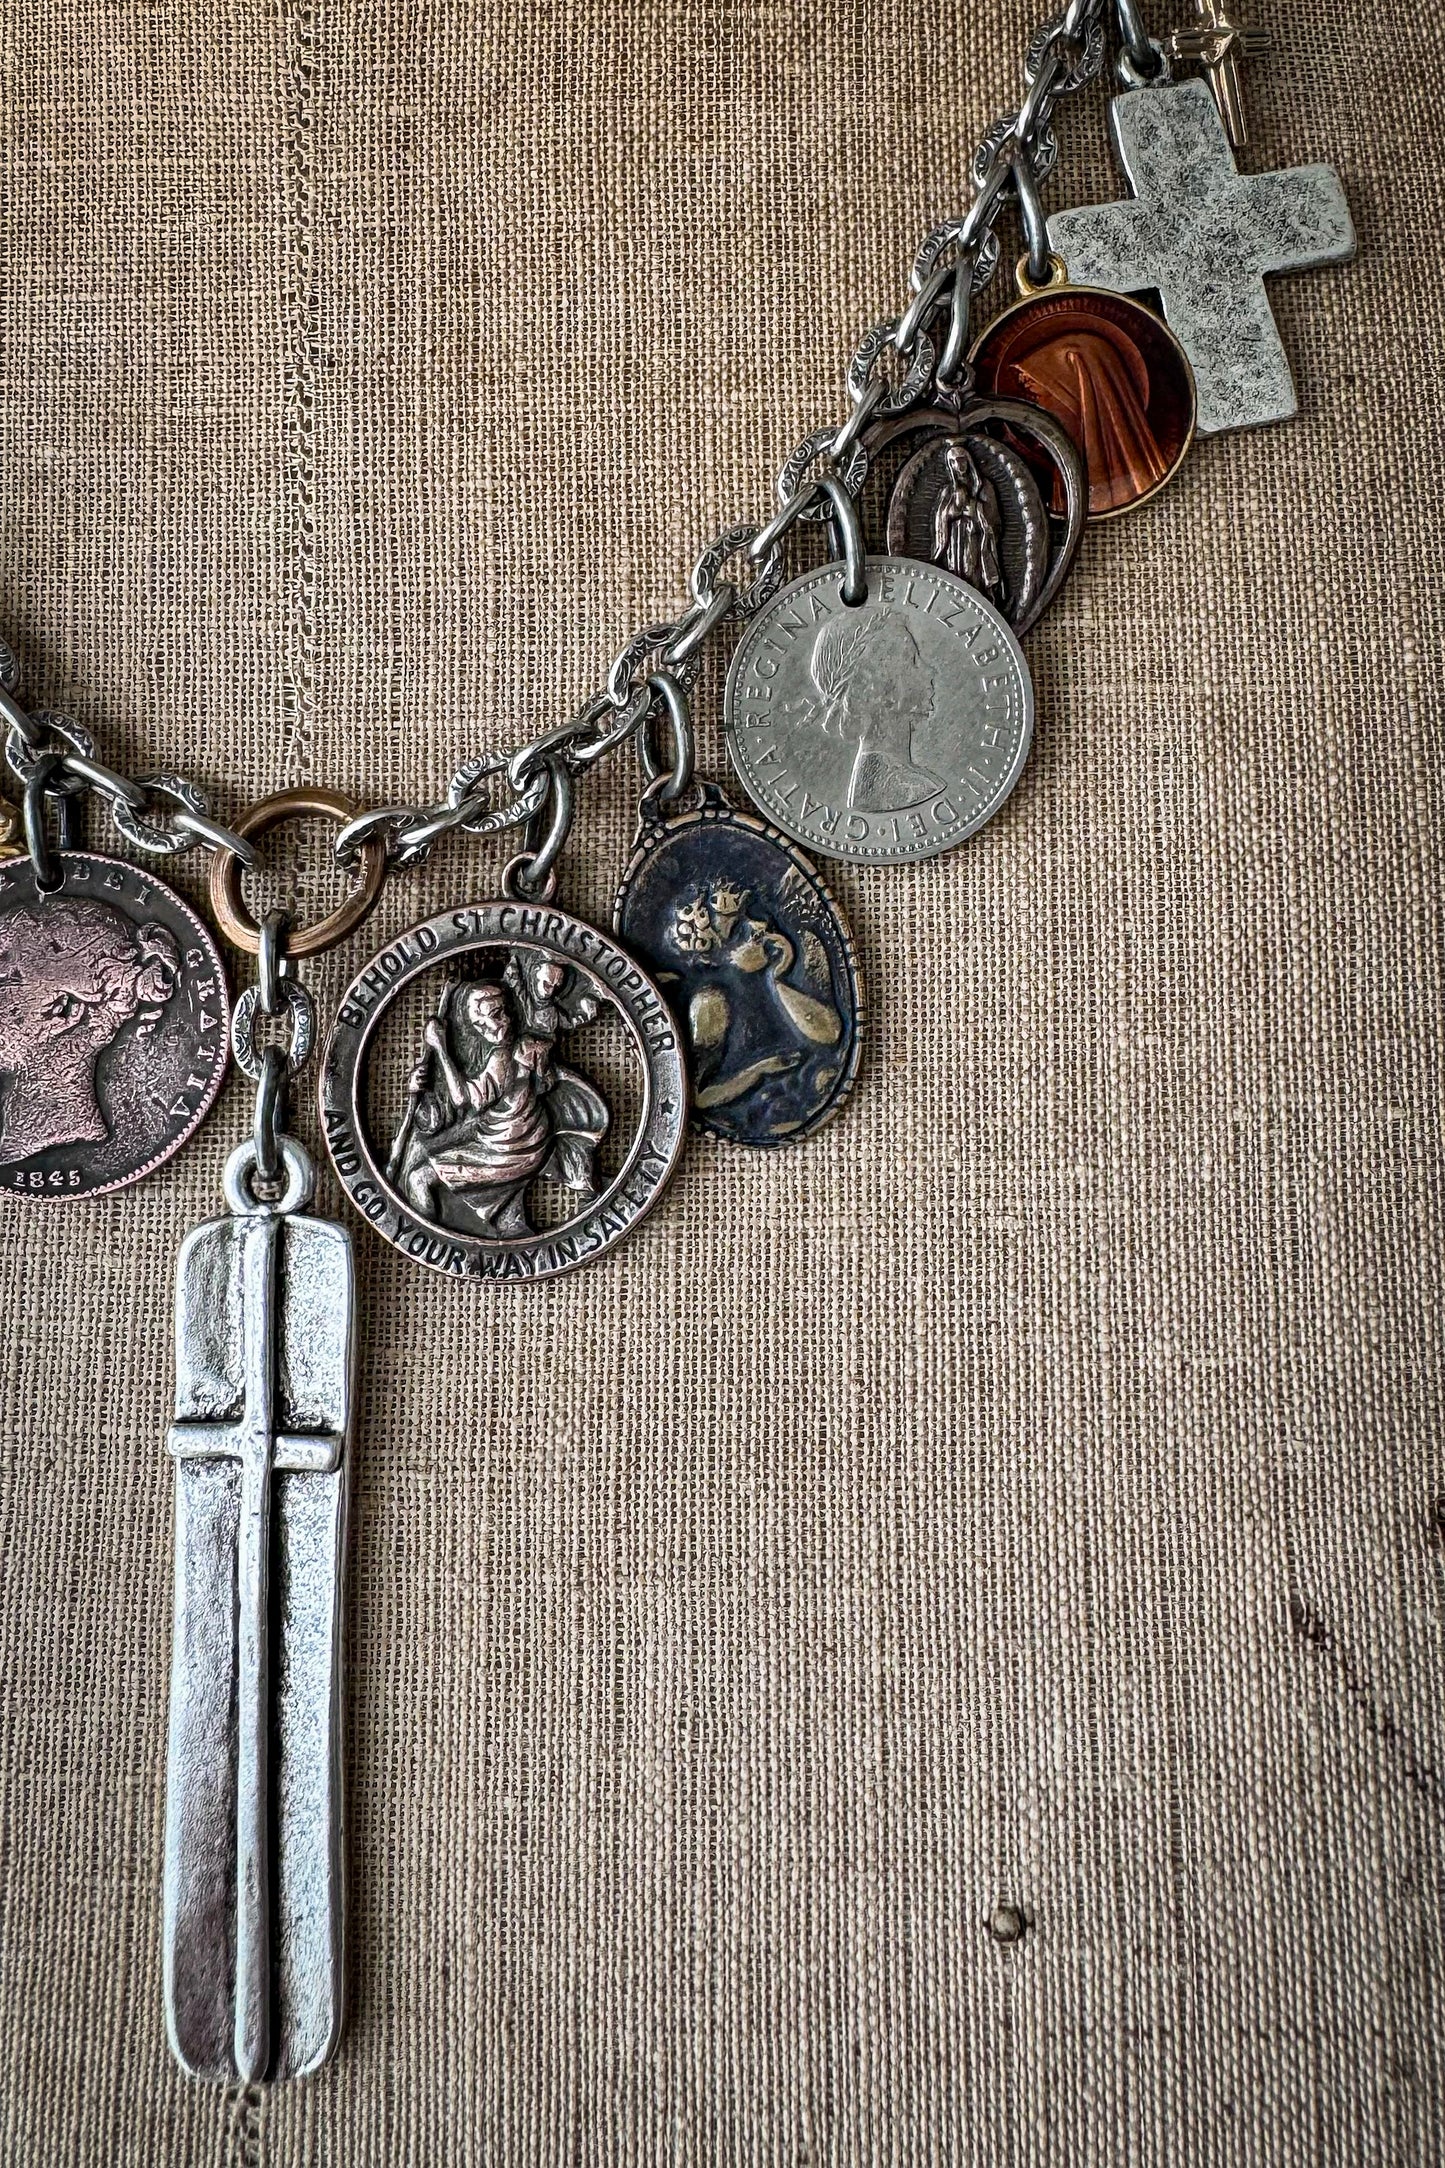 Queens, Saints, & Angels Necklace